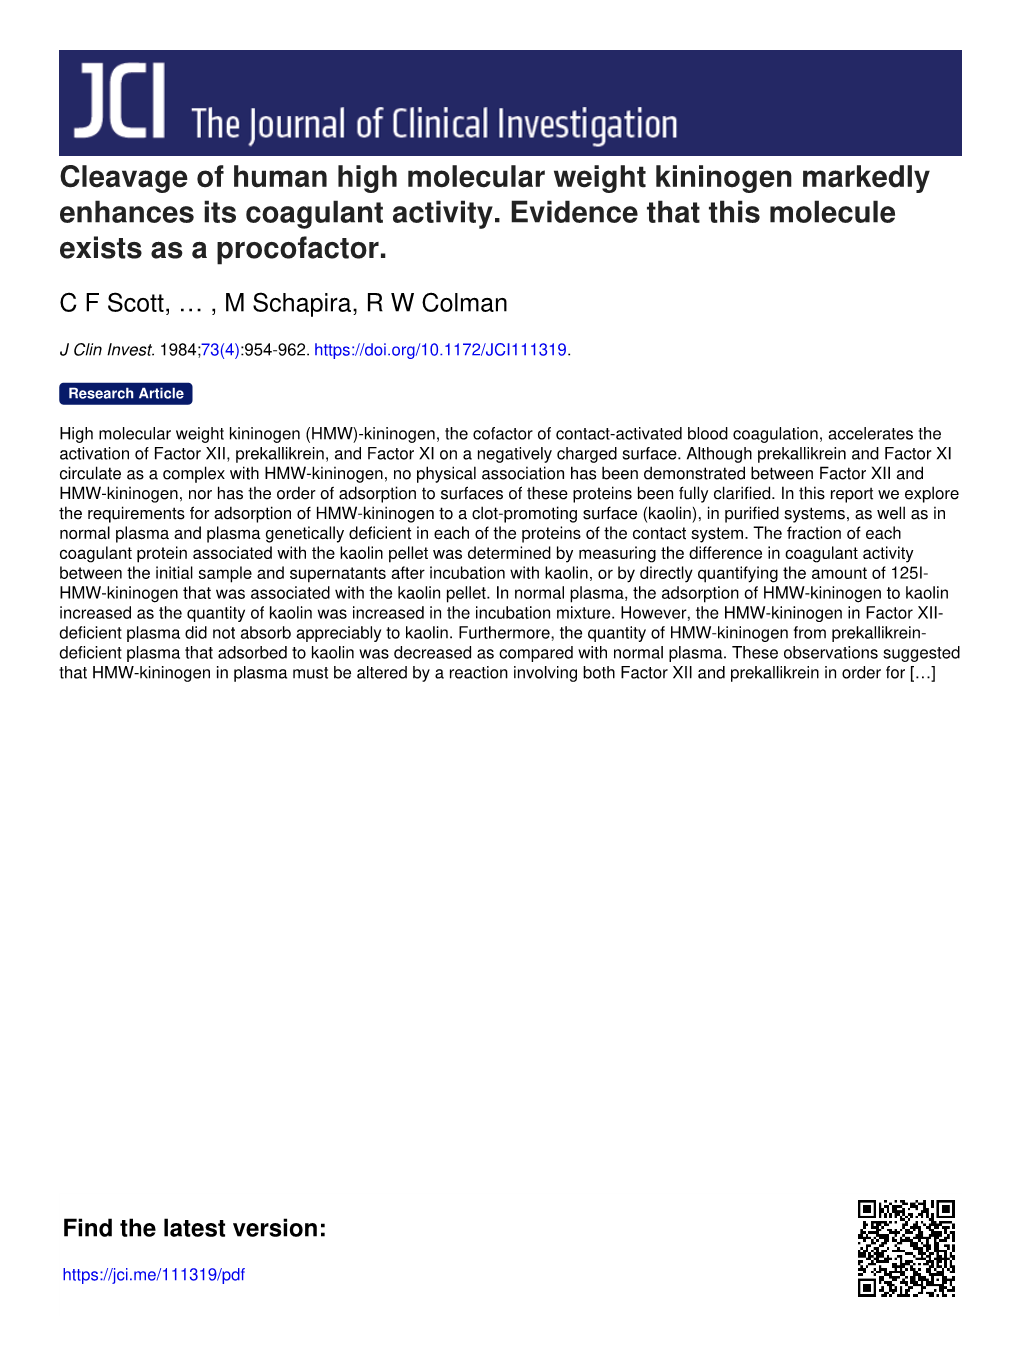 Cleavage of Human High Molecular Weight Kininogen Markedly Enhances Its Coagulant Activity